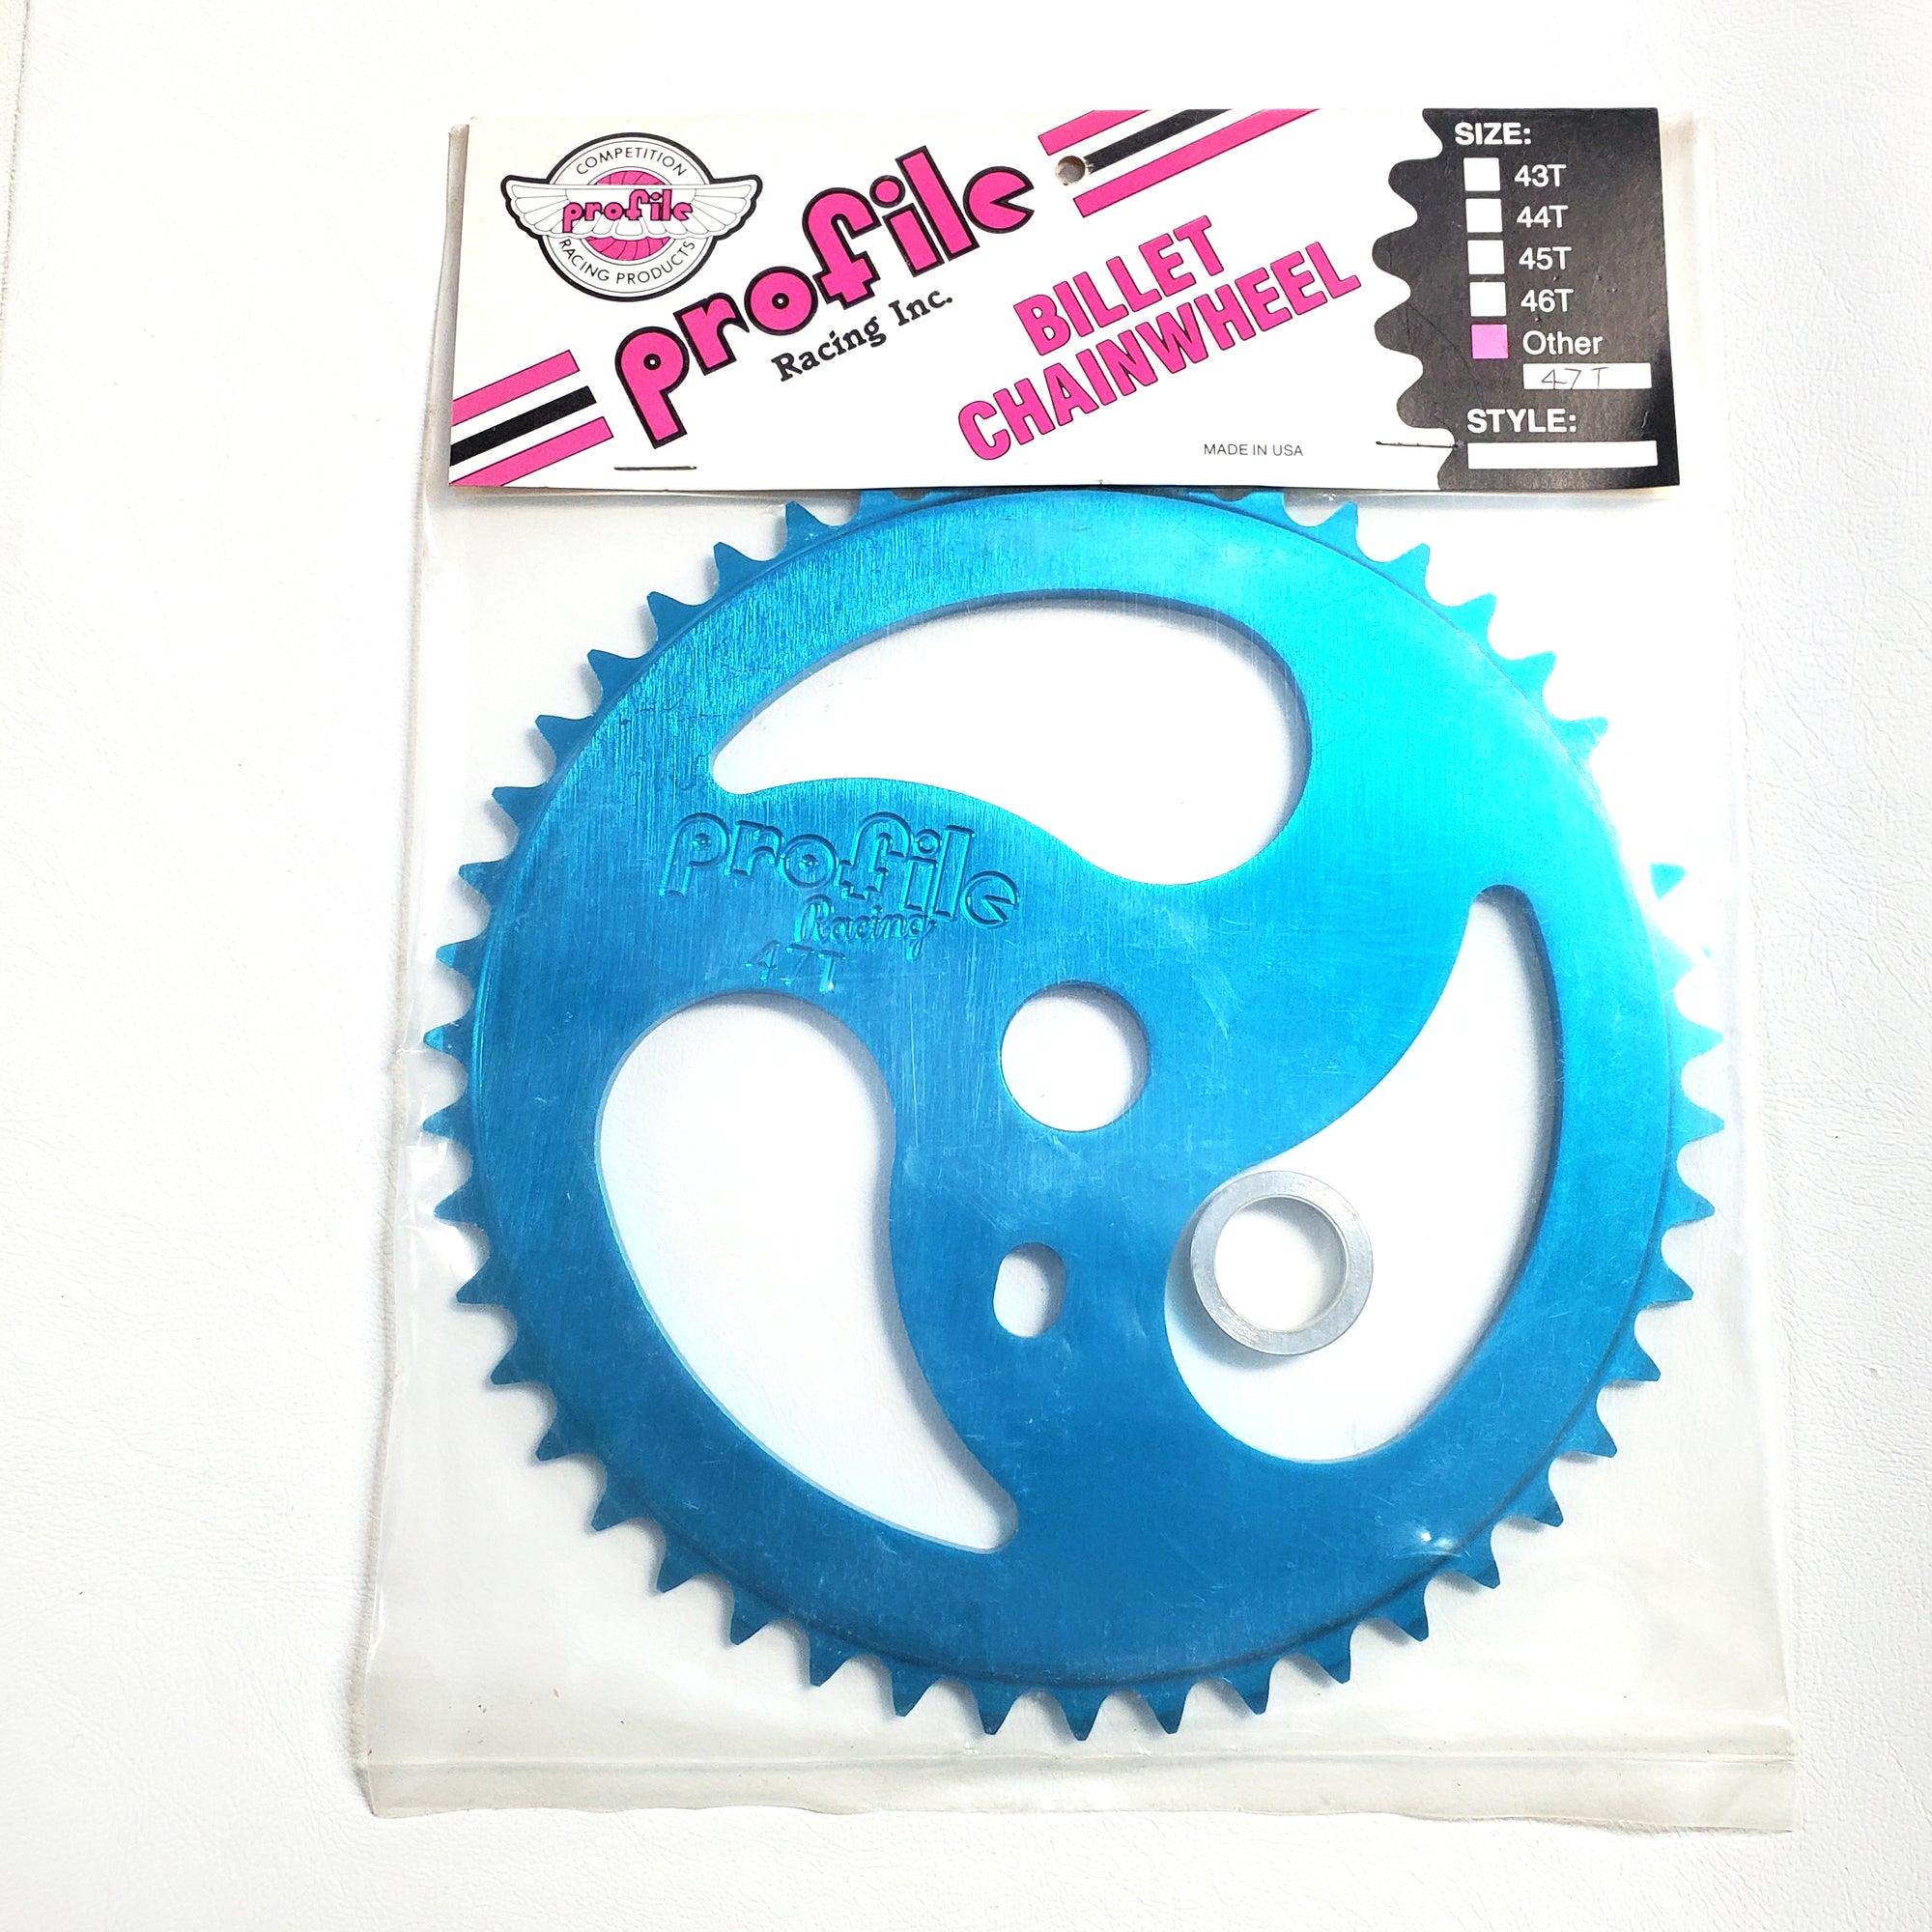 Profile 47t Ripsaw BMX Sprocket / Chainwheel - Blue - NOS - USA Made